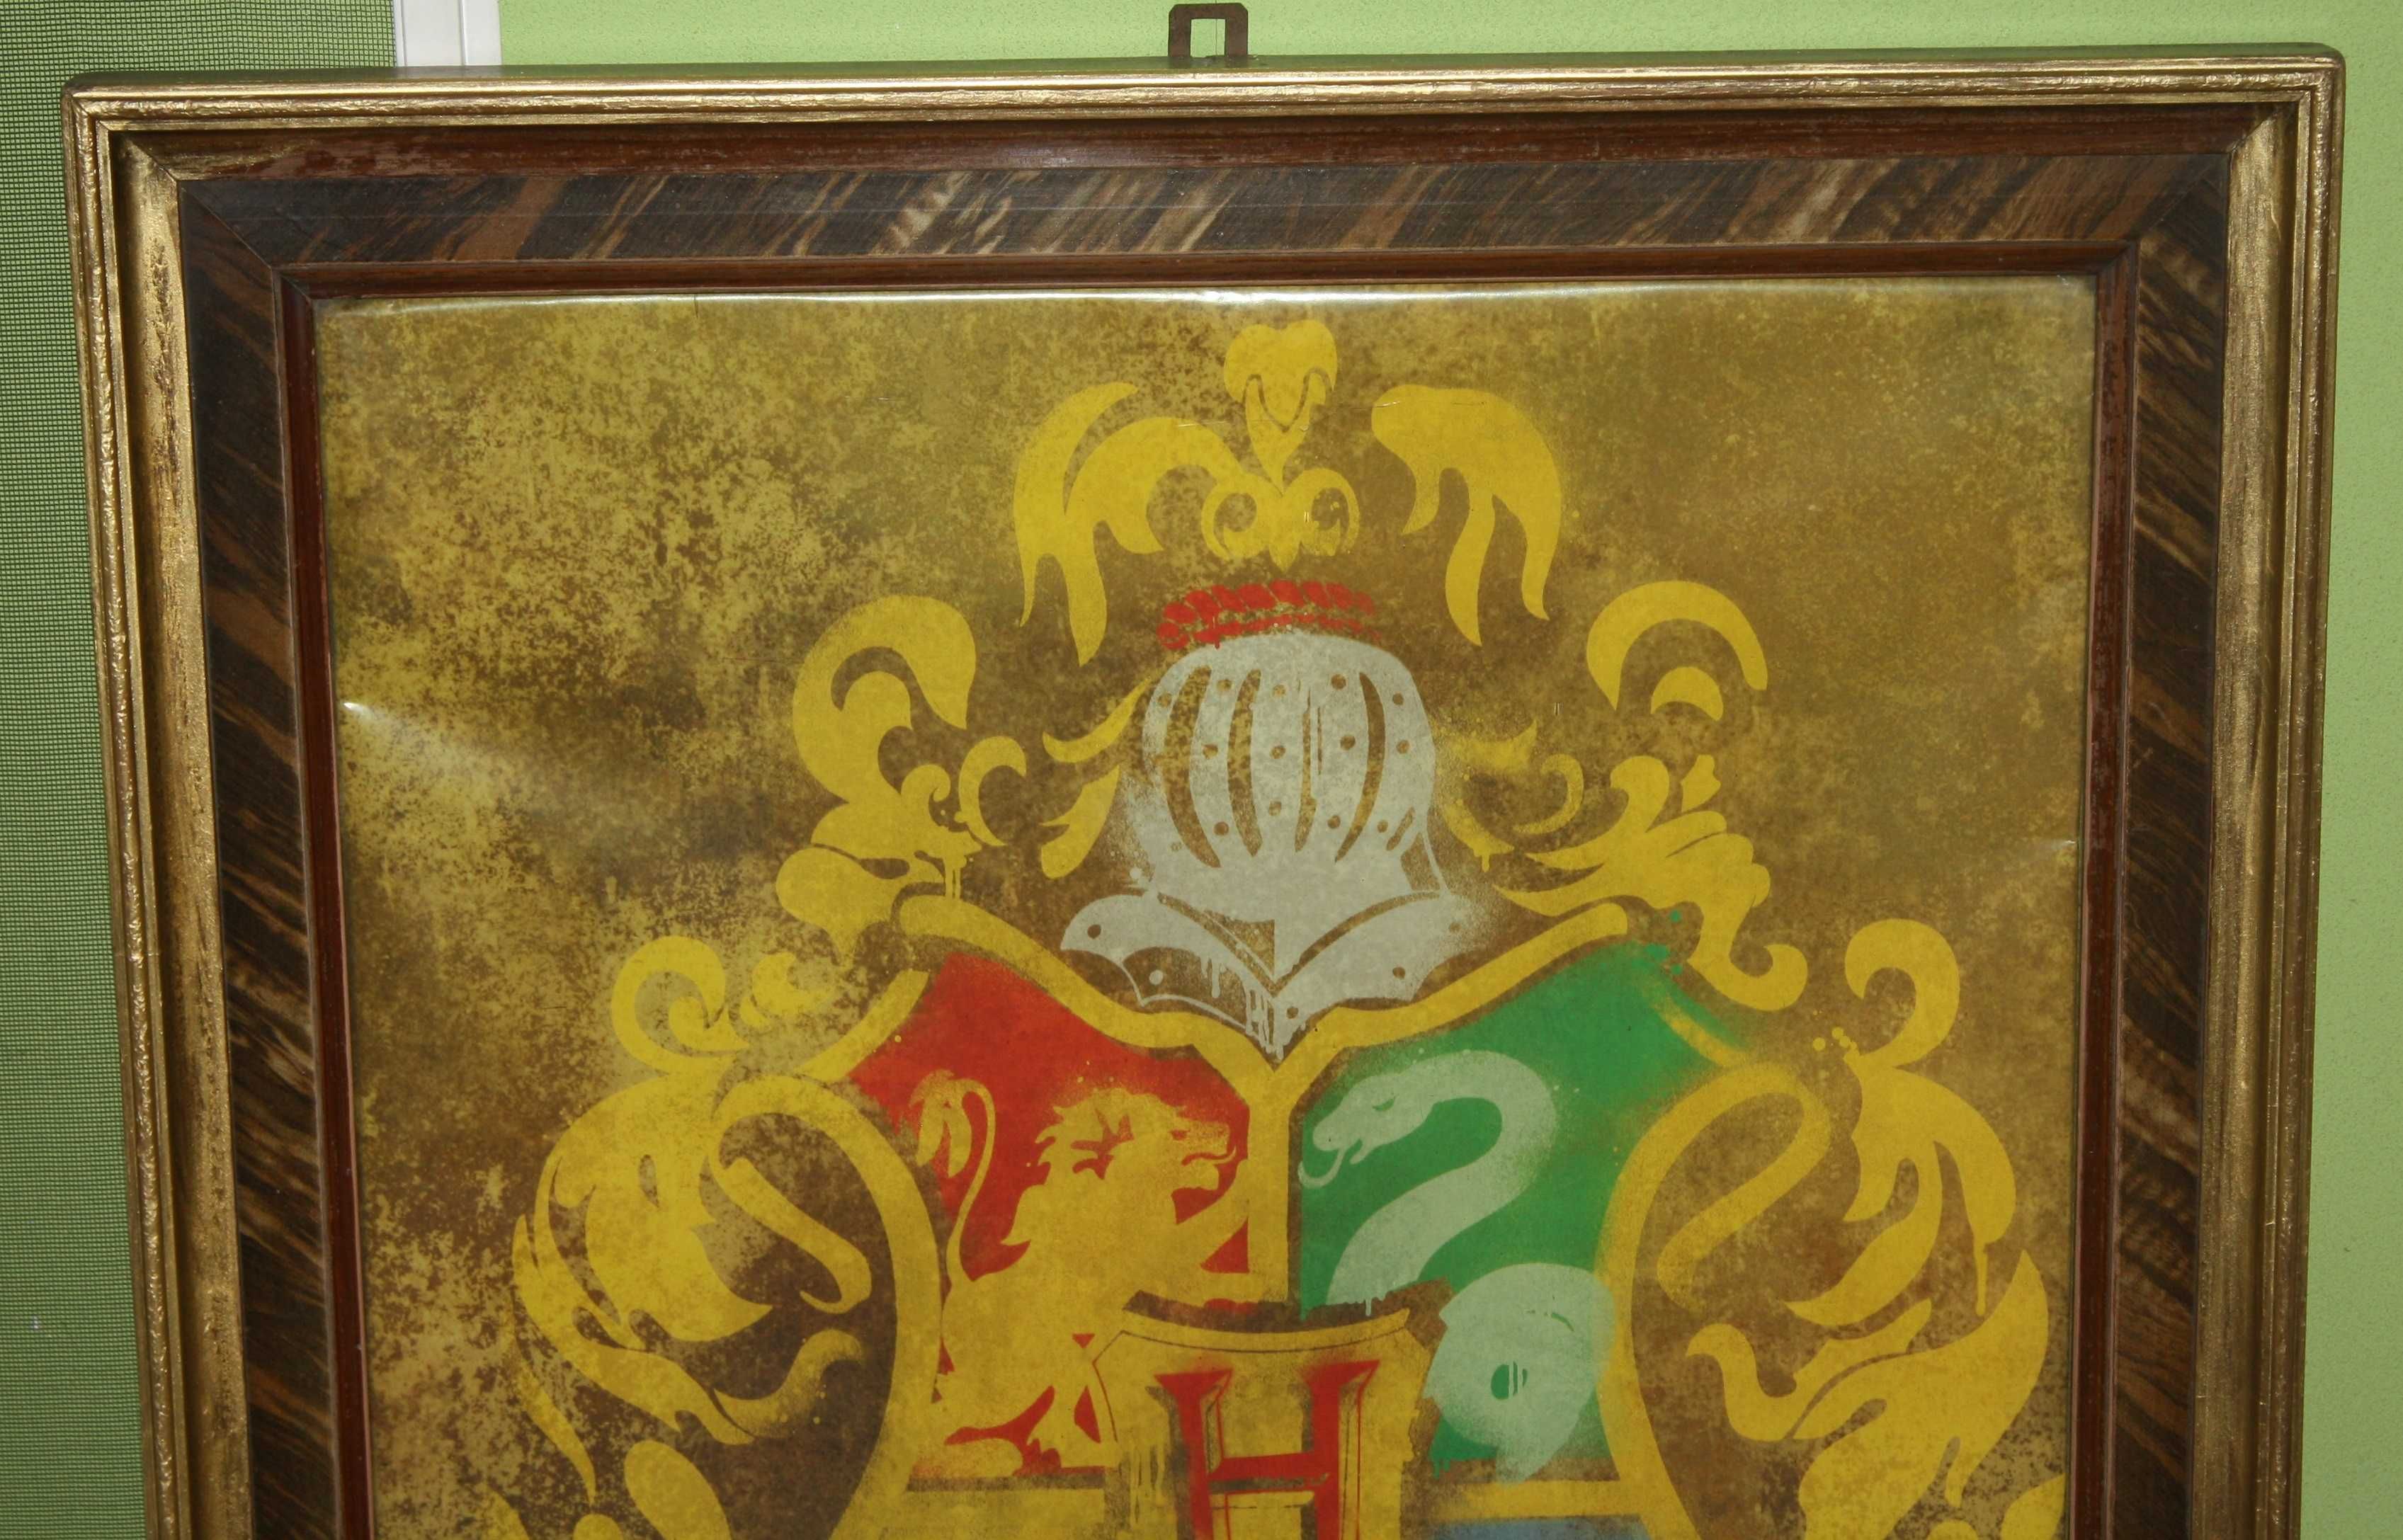 Obraz Plakat Harry Potter w ramie duży Hogwart Domy